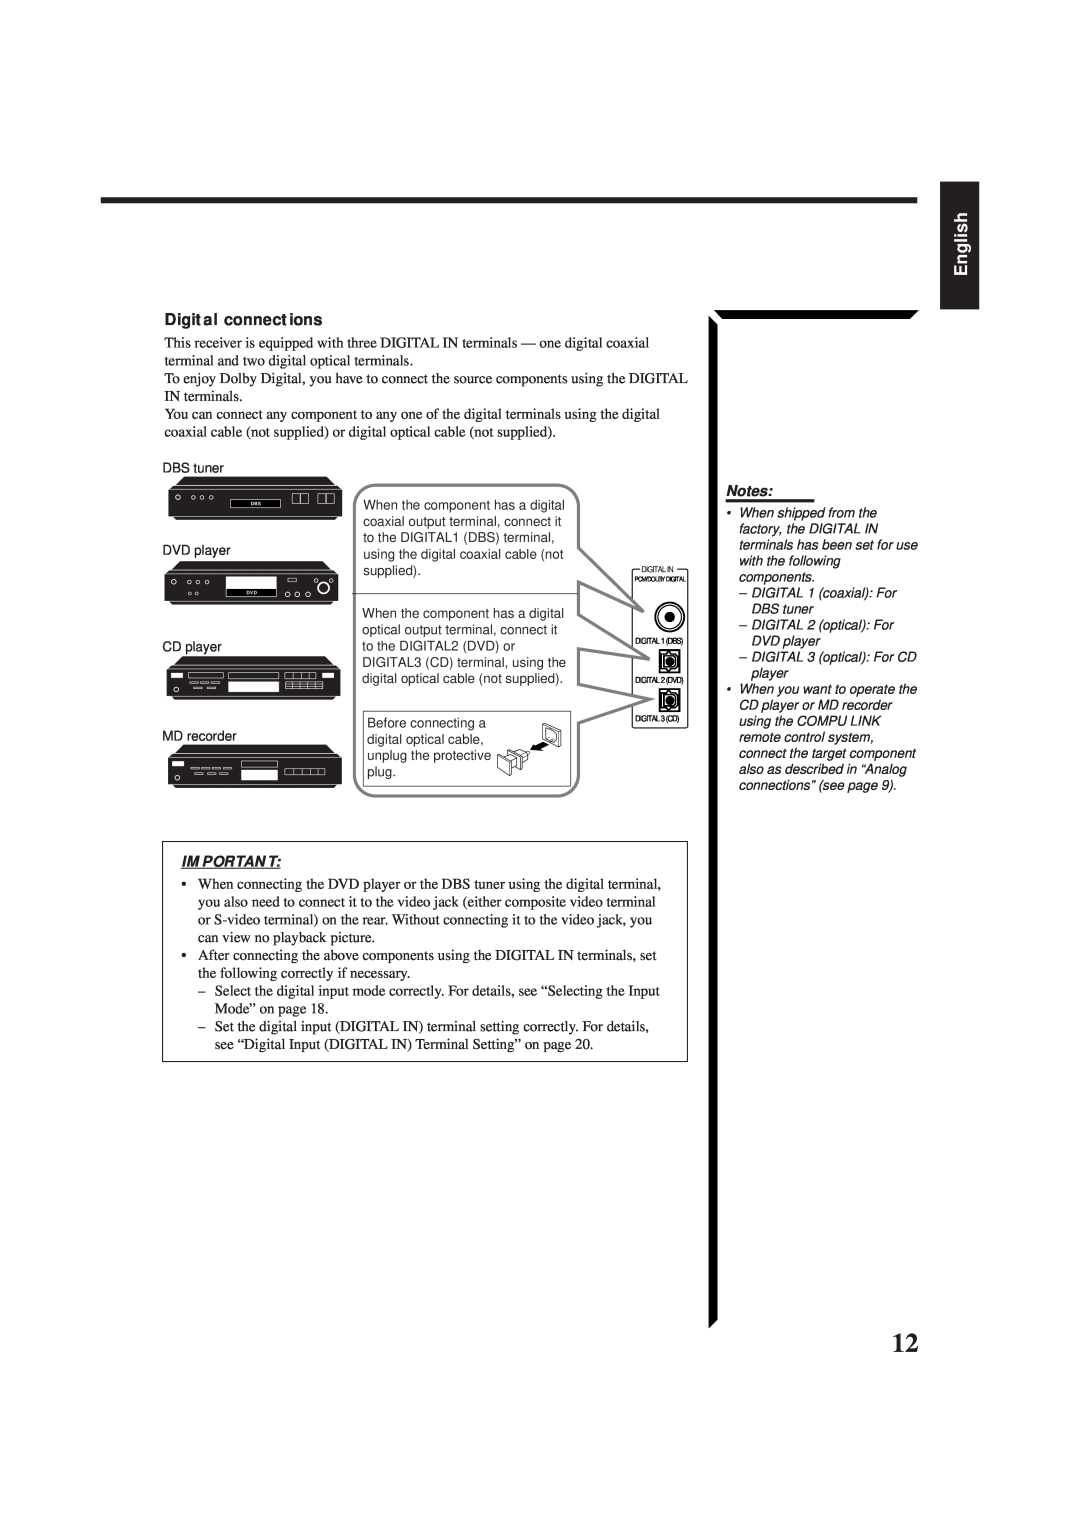 JVC RX-884PBK manual English, Digital connections, DBS tuner, DVD player, CD player MD recorder 